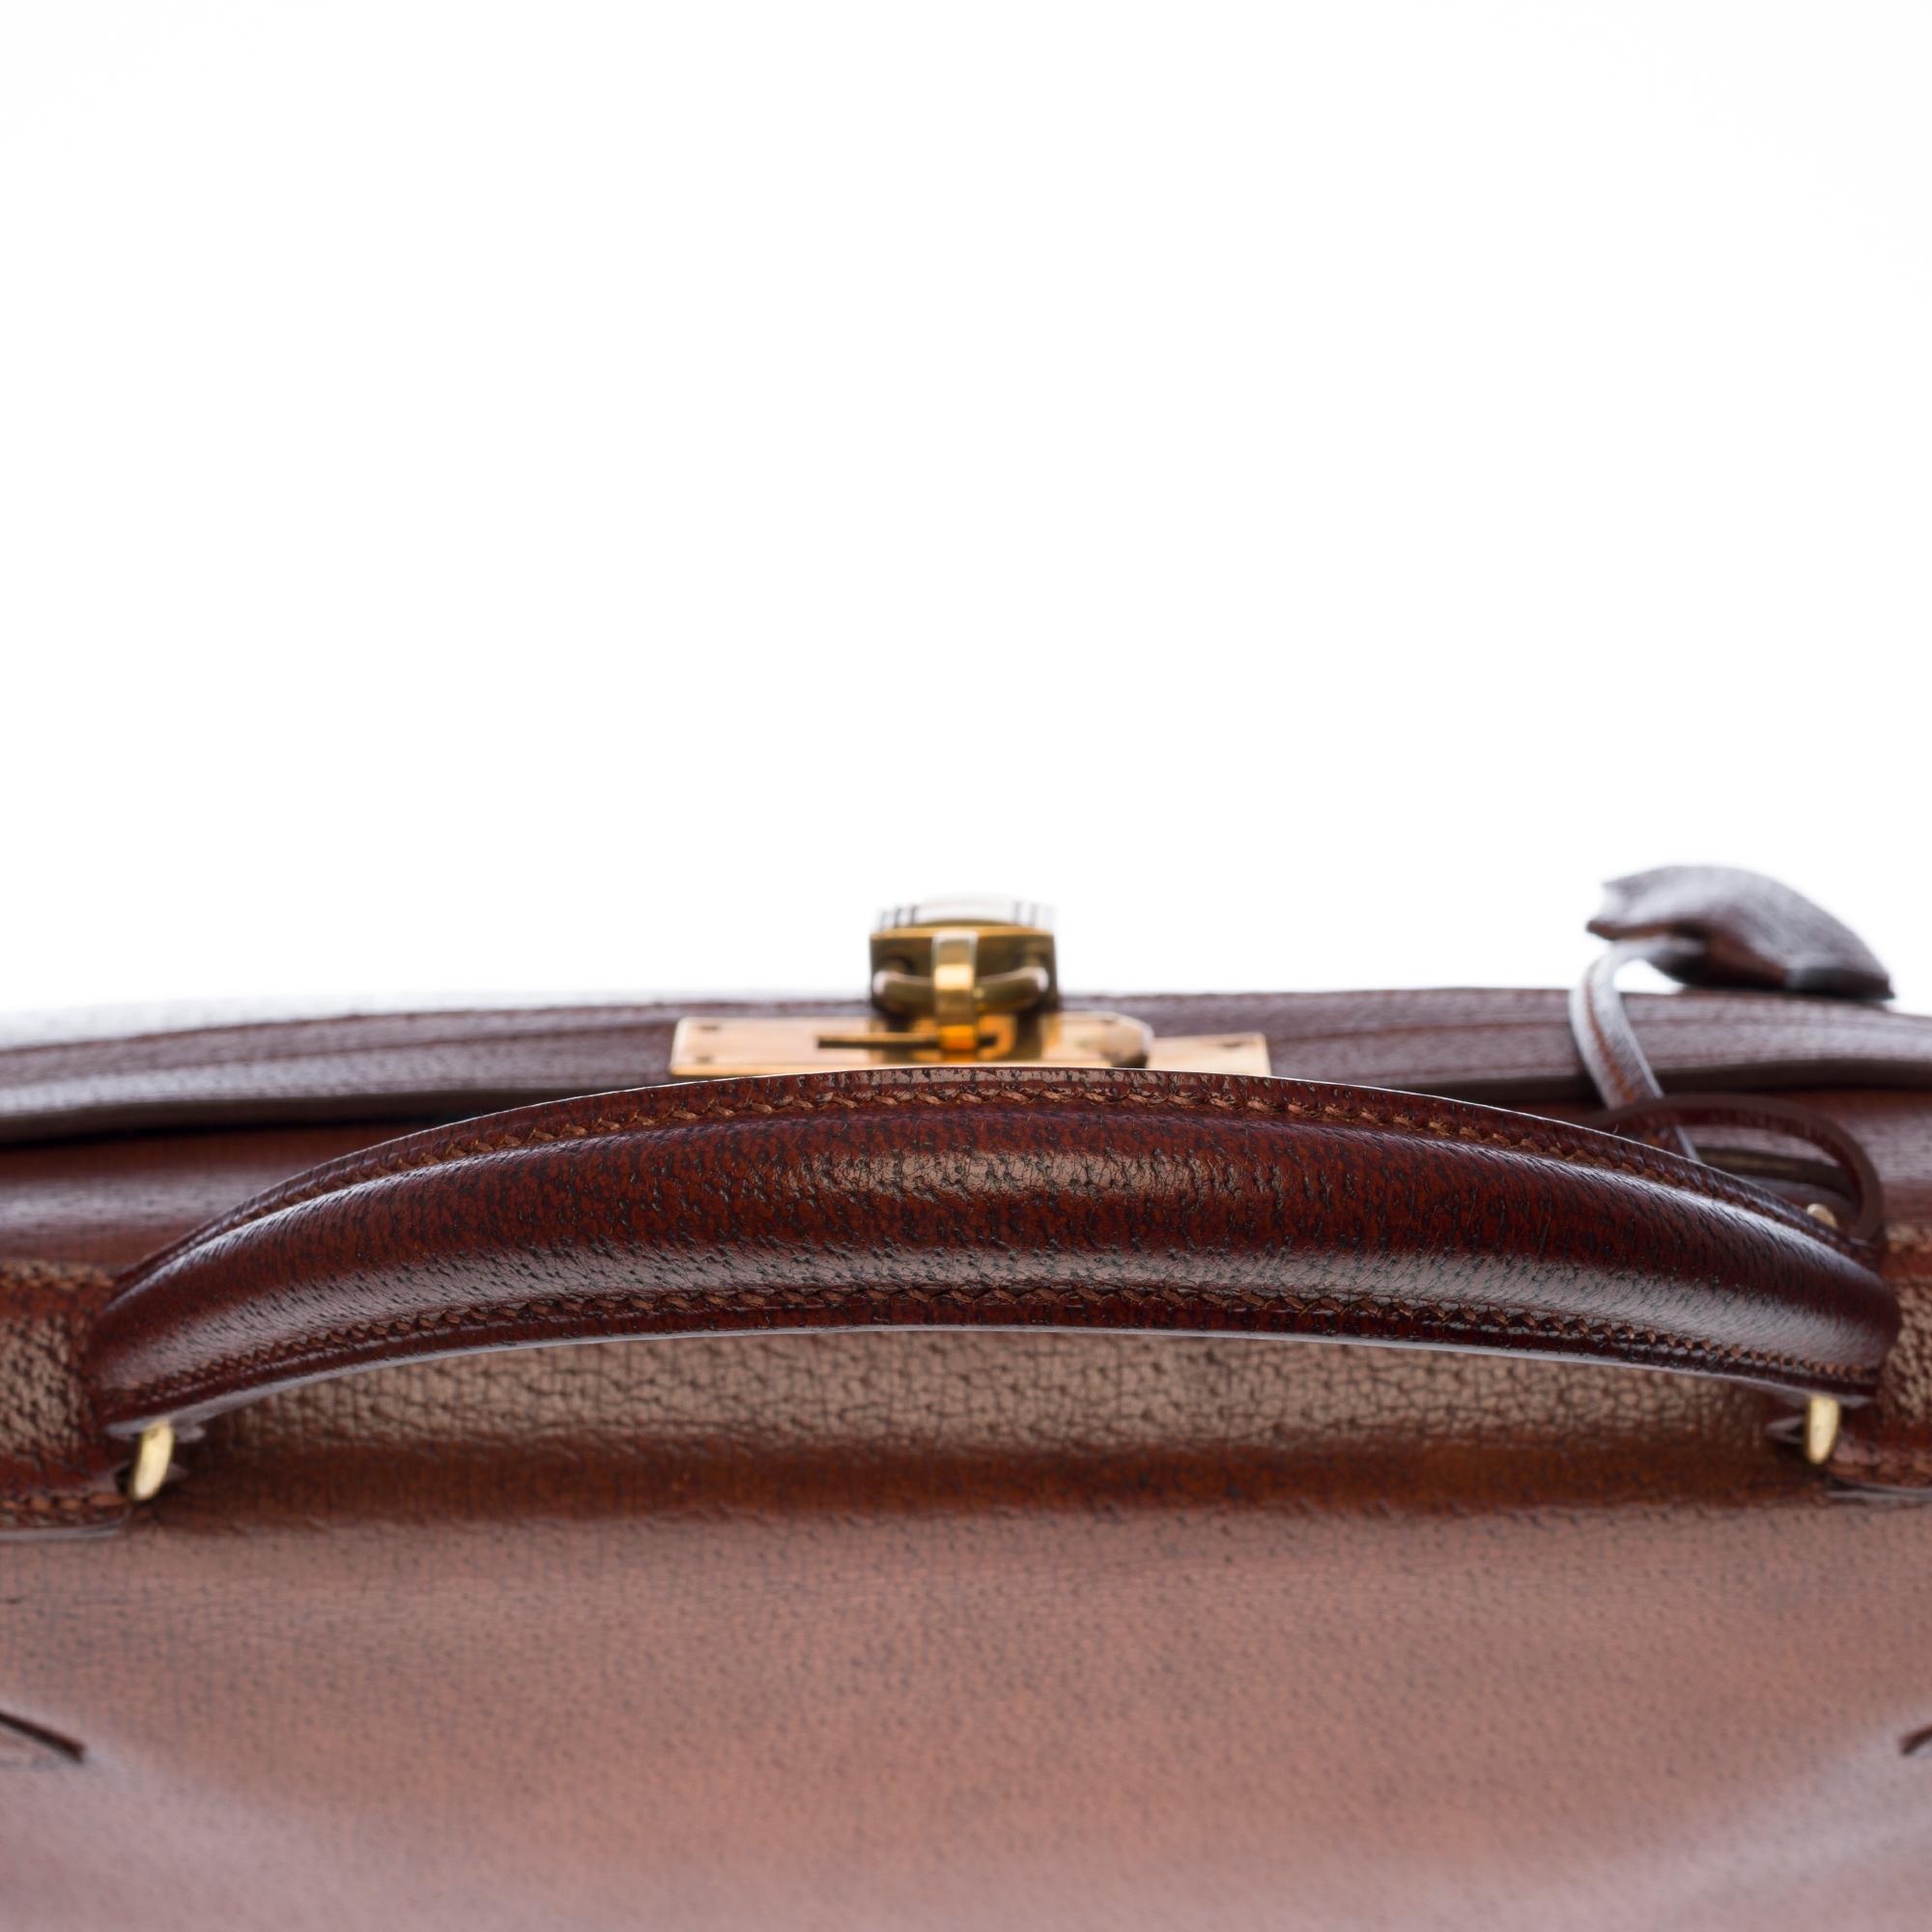 Hermès Kelly 32 handbag with strap in Brown Pecari leather, GHW 4